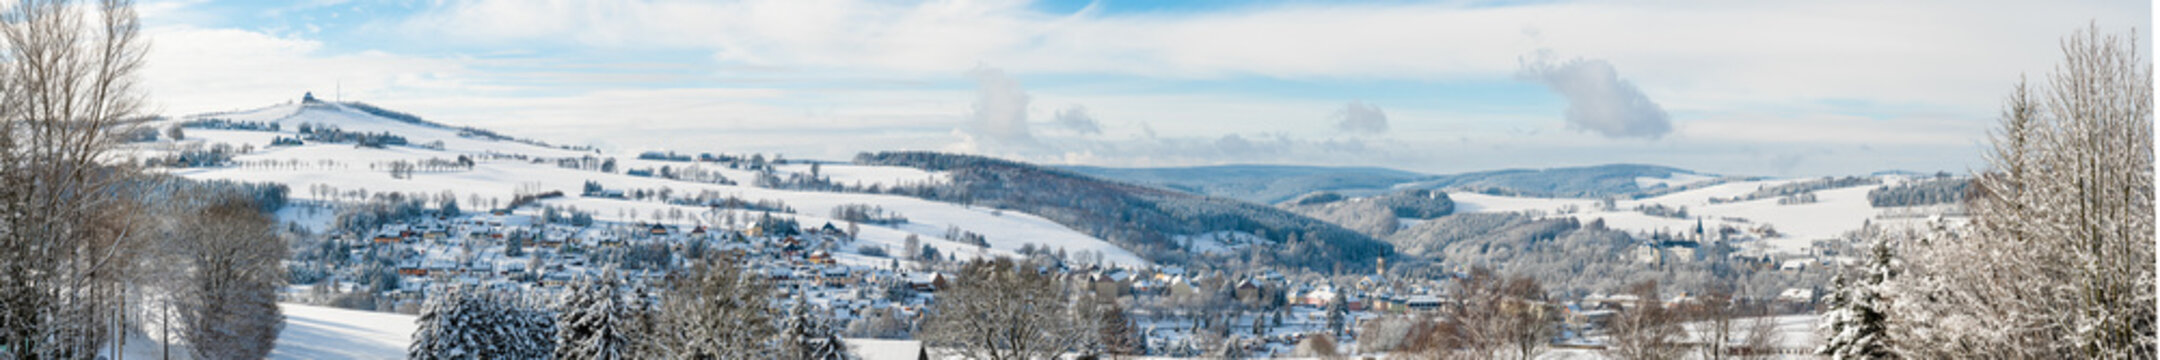 Ortschaft in Erzgebirge Winterlandschaft